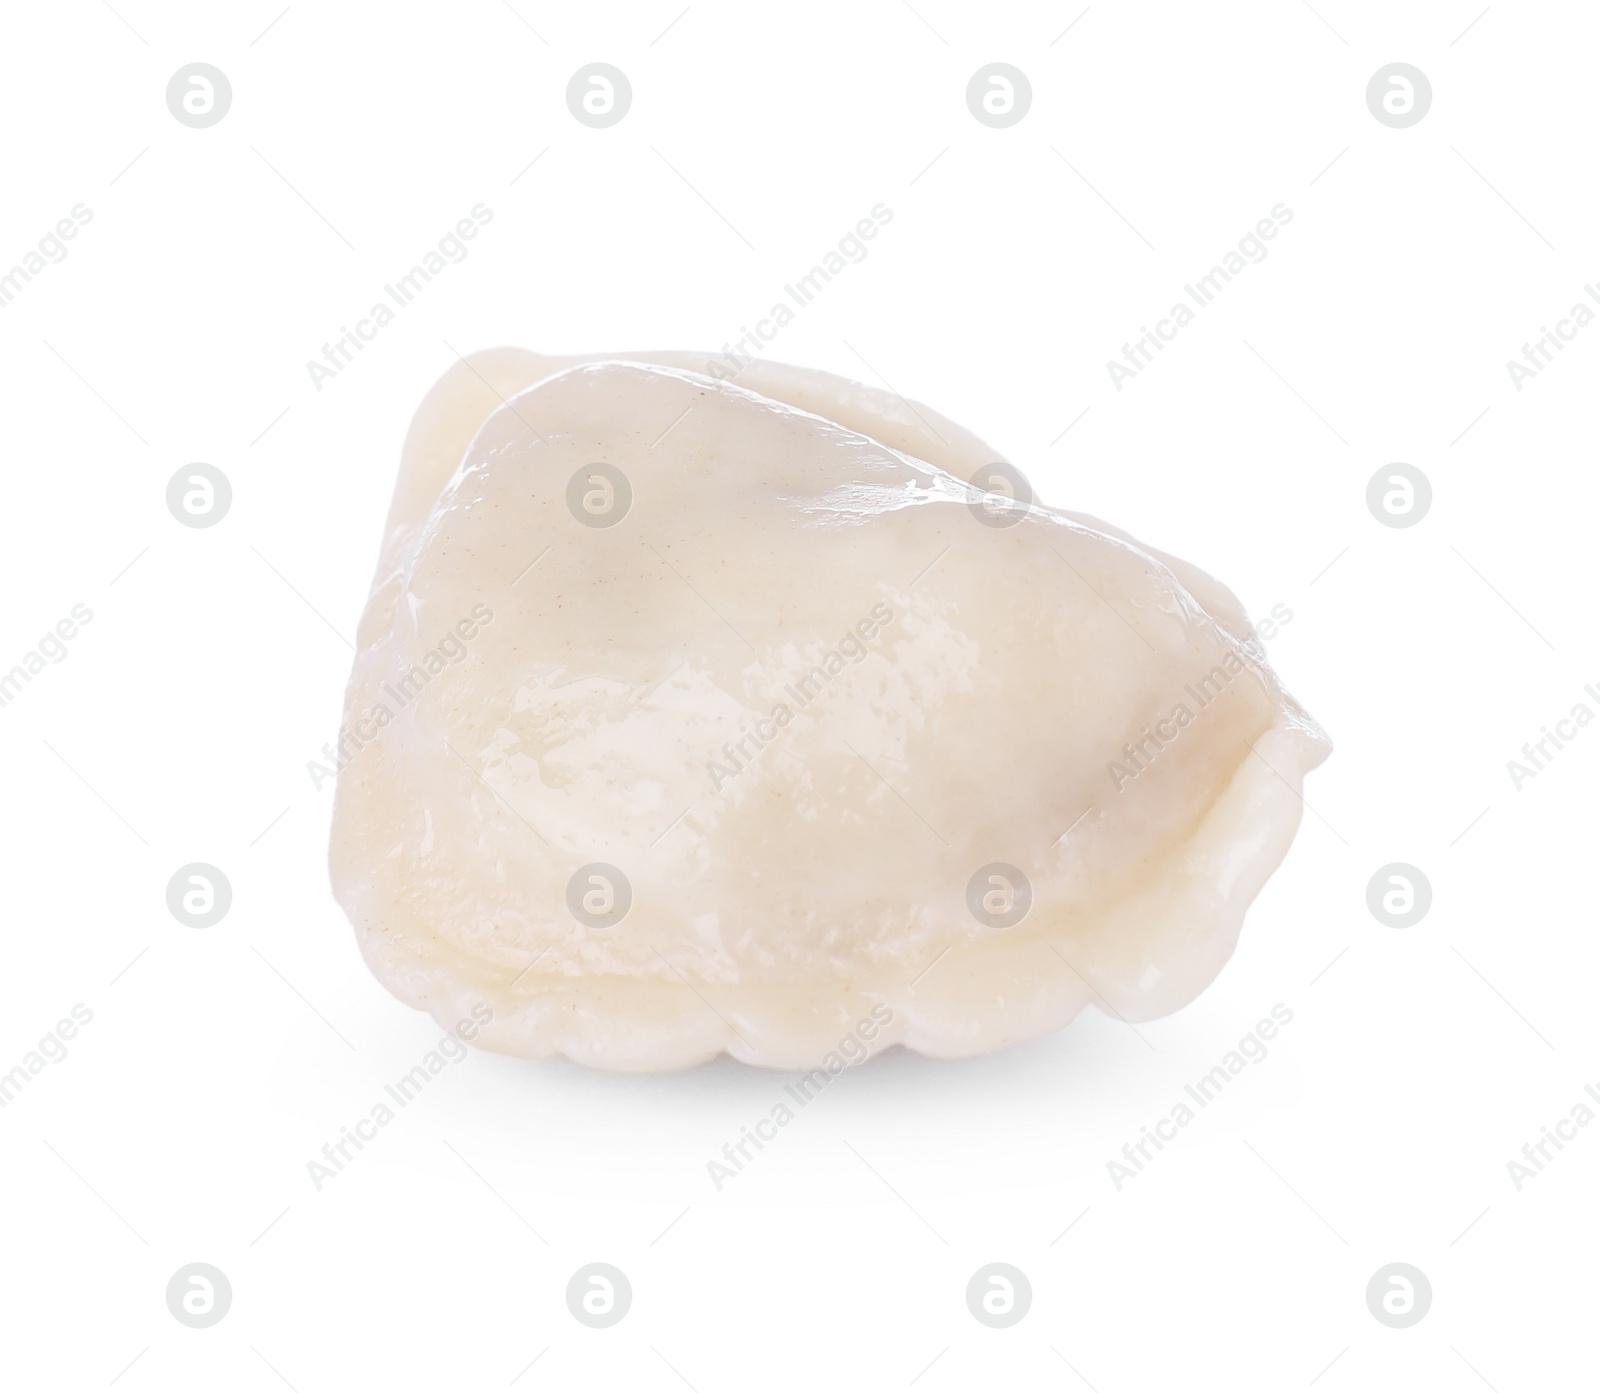 Photo of One dumpling (varenyk) with tasty filling isolated on white